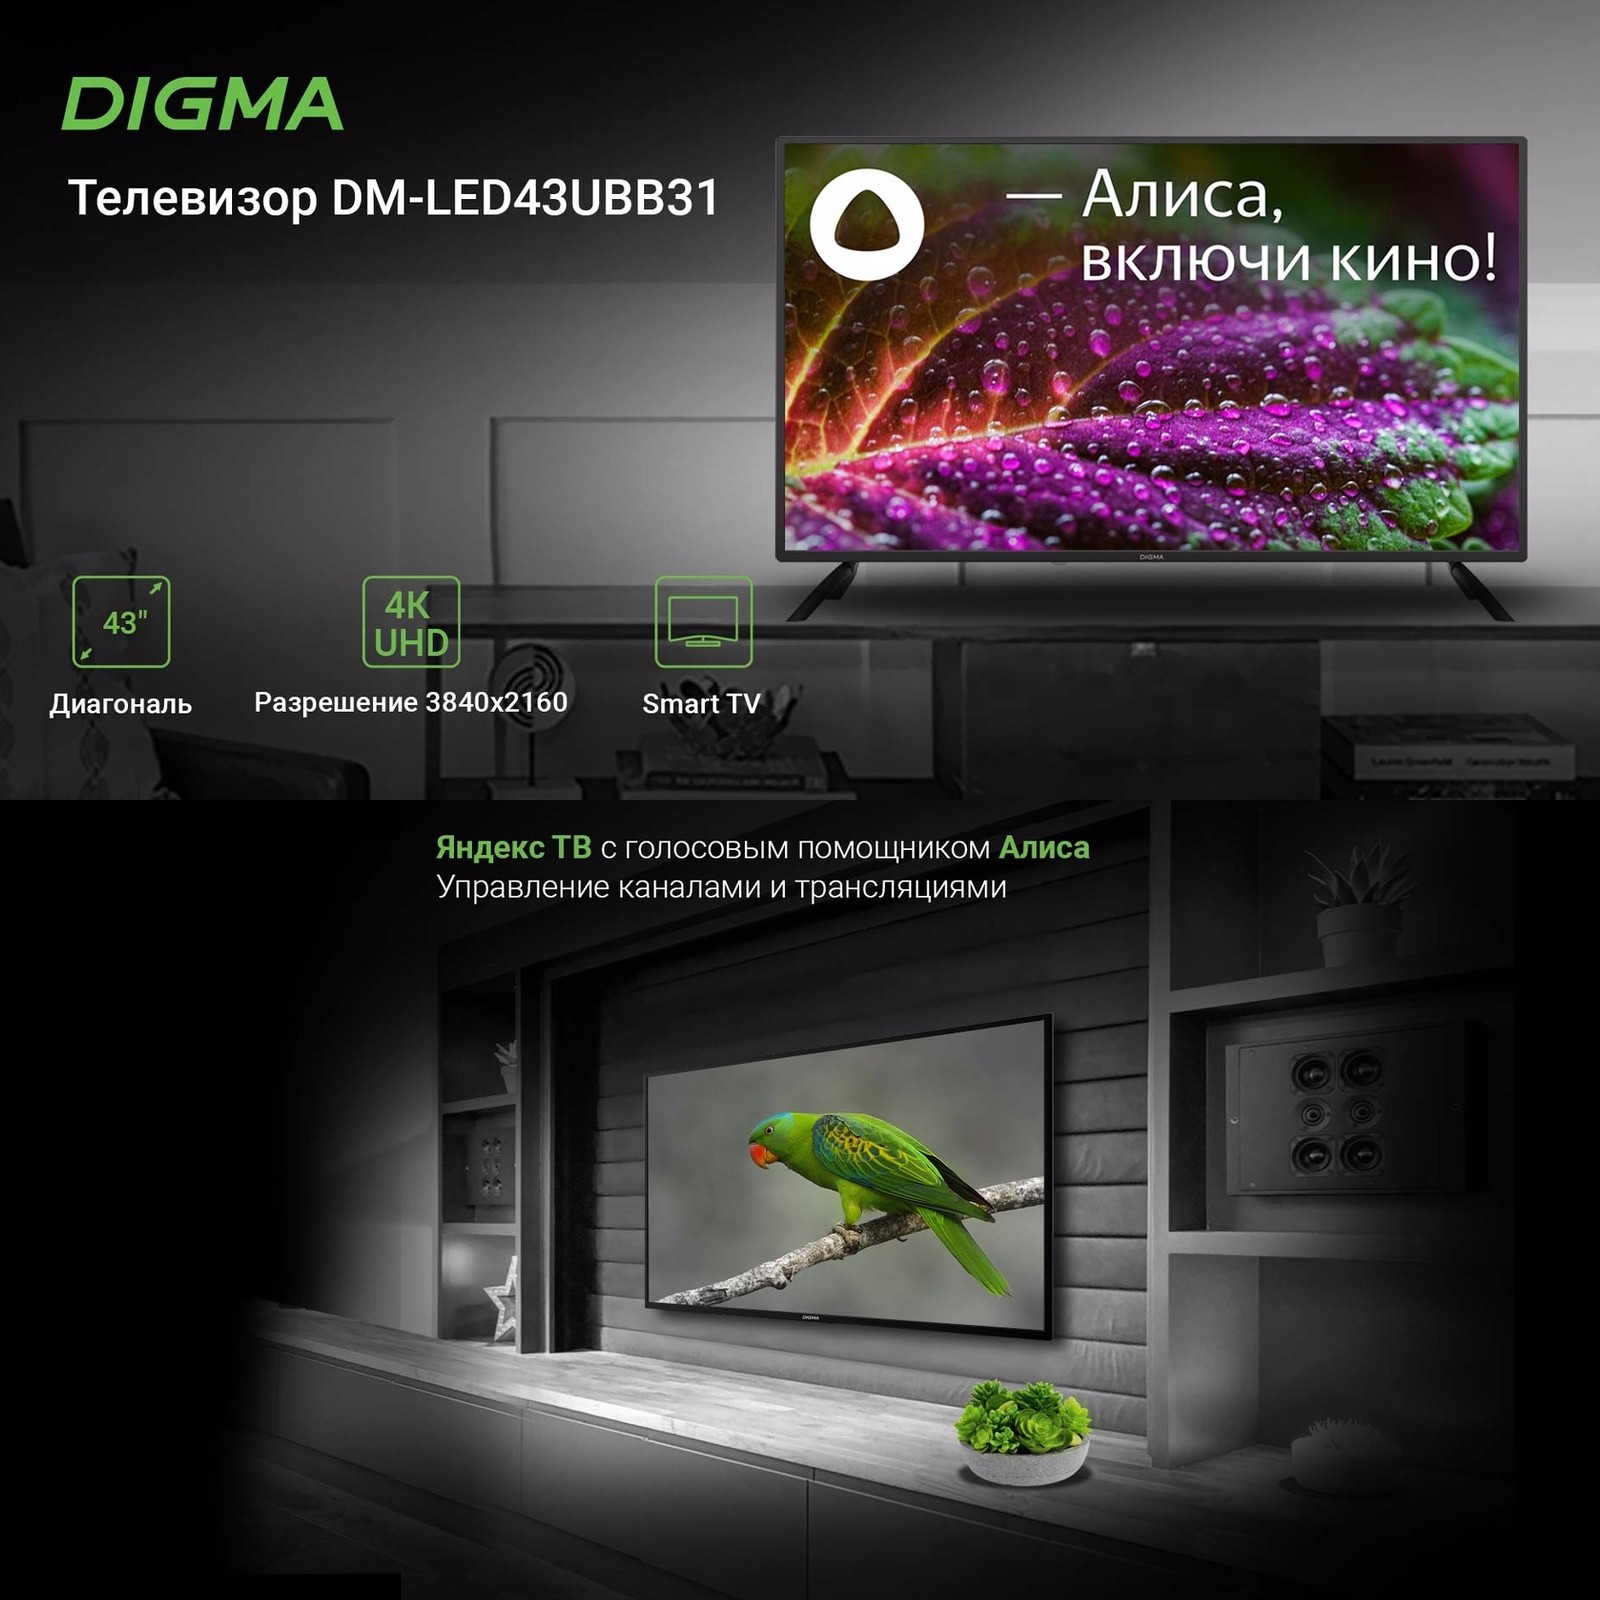 Телевизор Digma DM-LED43UBB31. Яндекс ТВ с голосовым помощником Алиса.